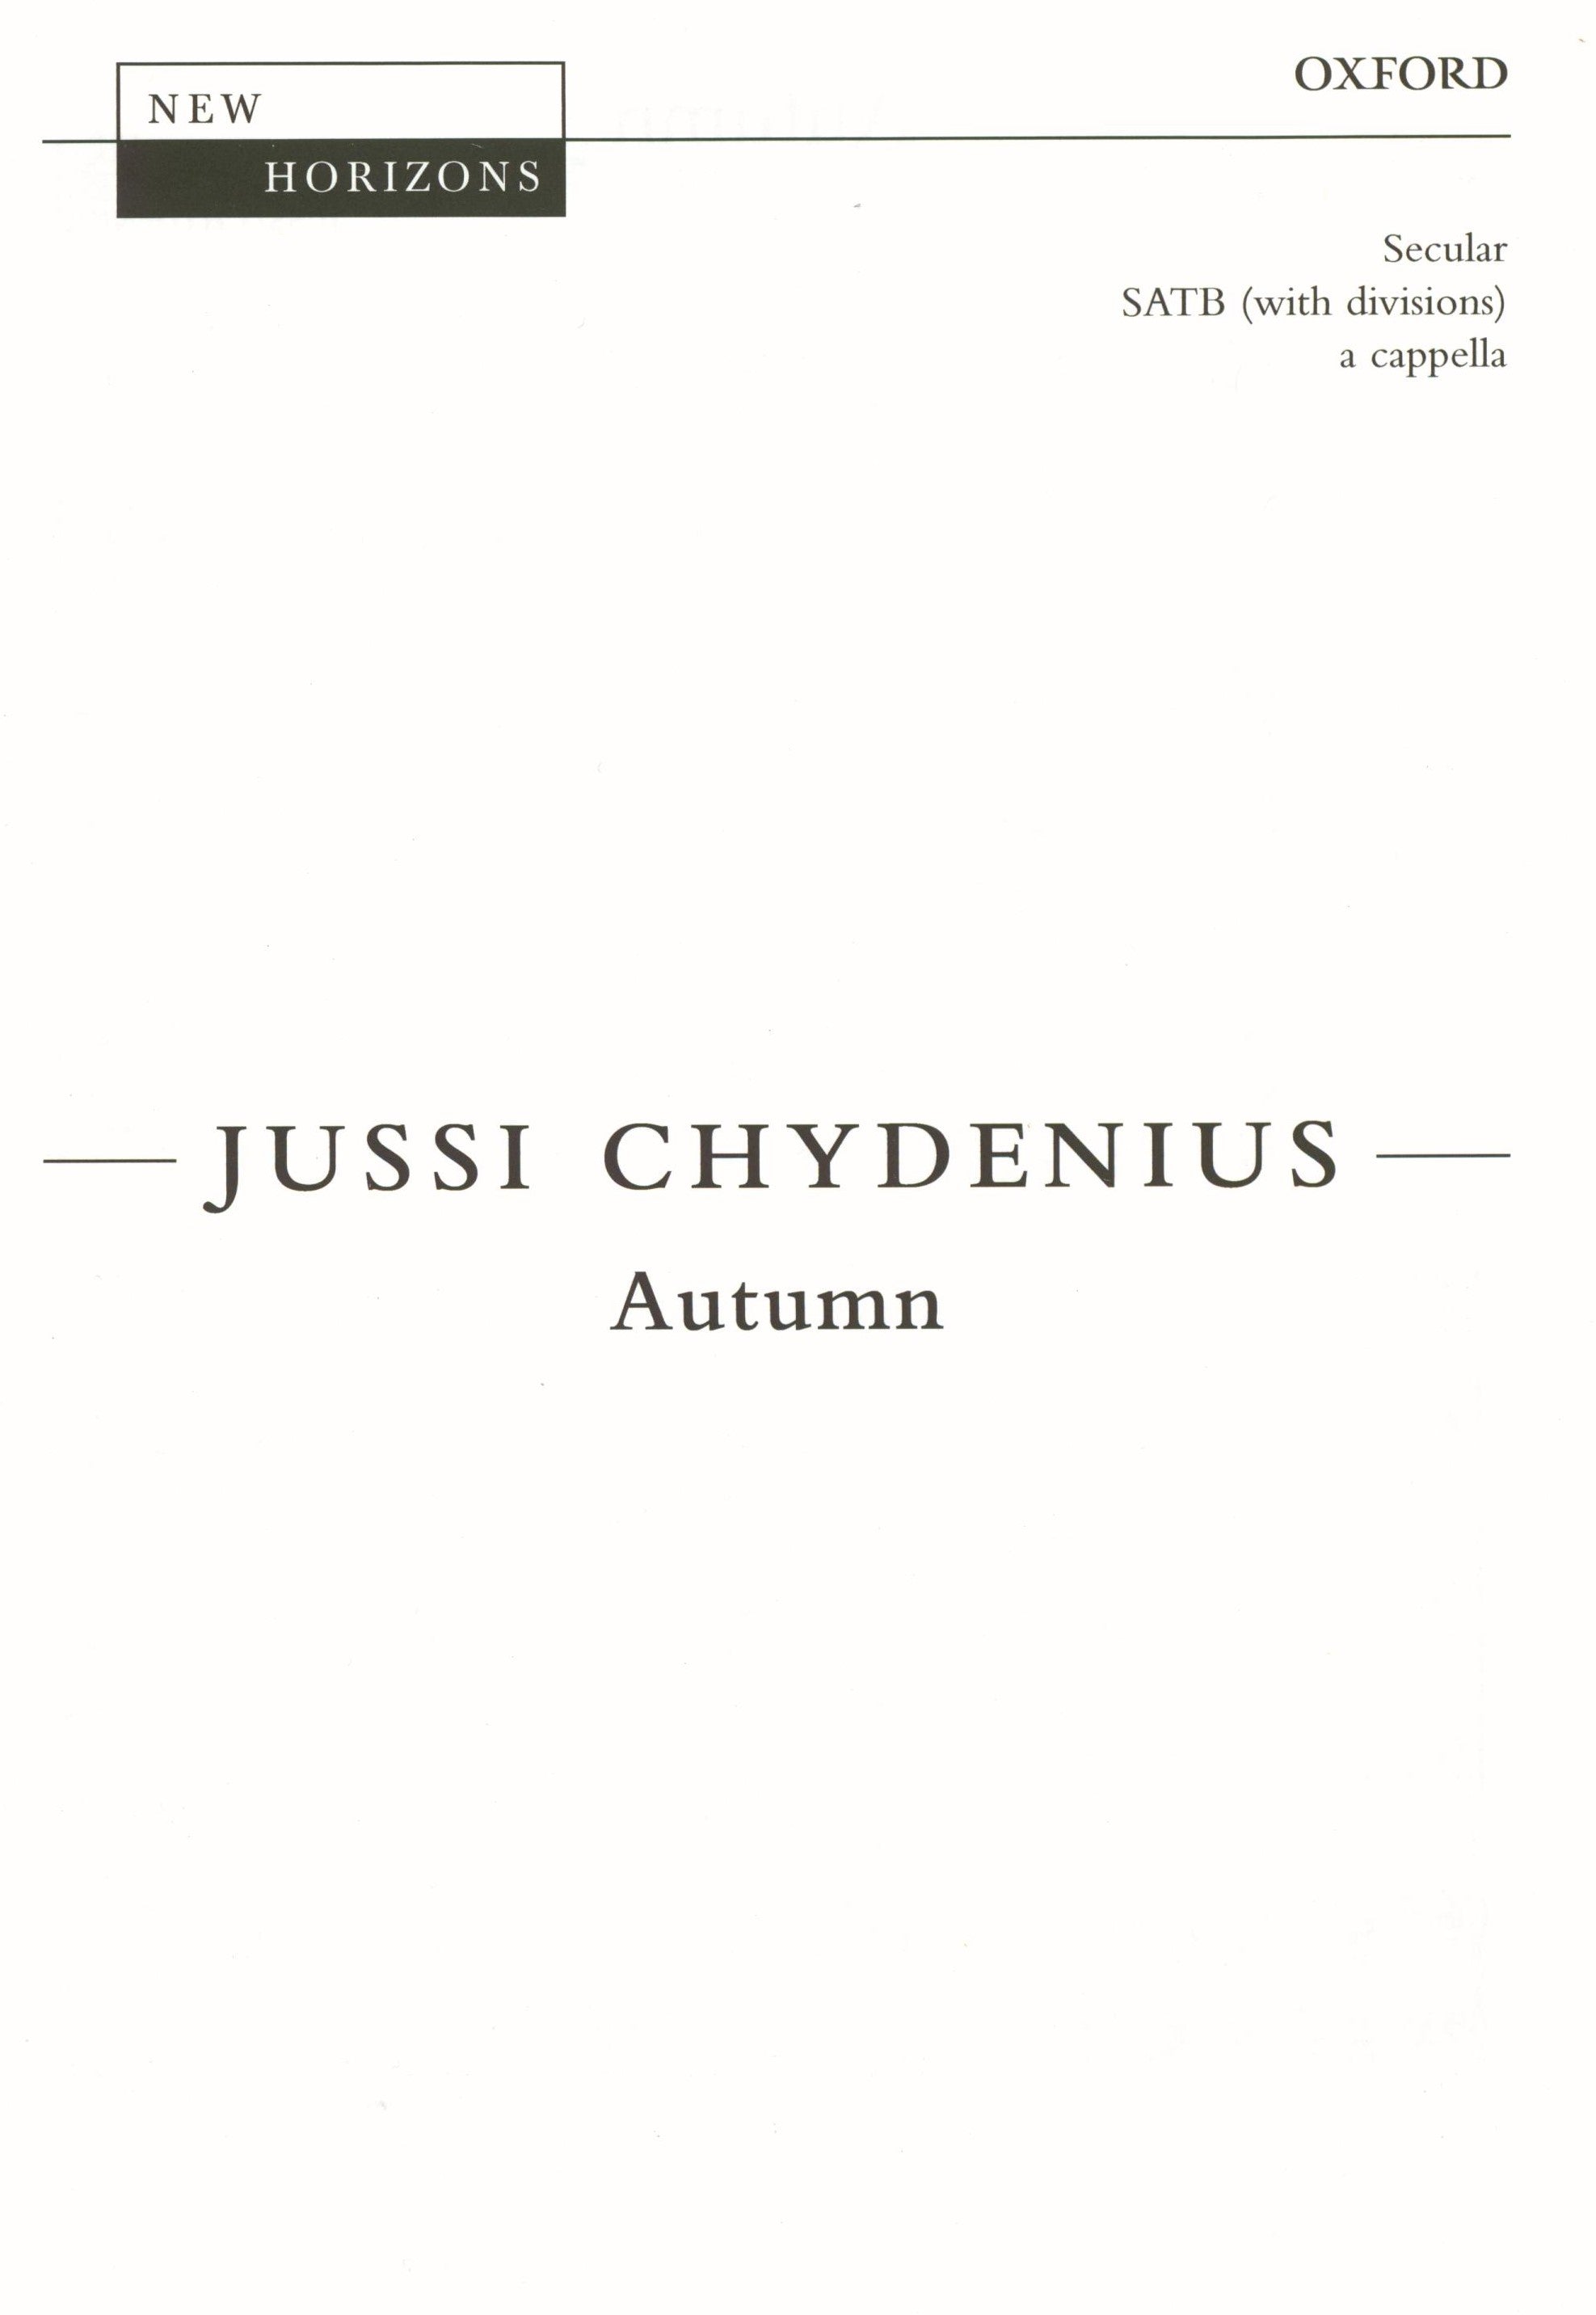 Chydenius: Autumn